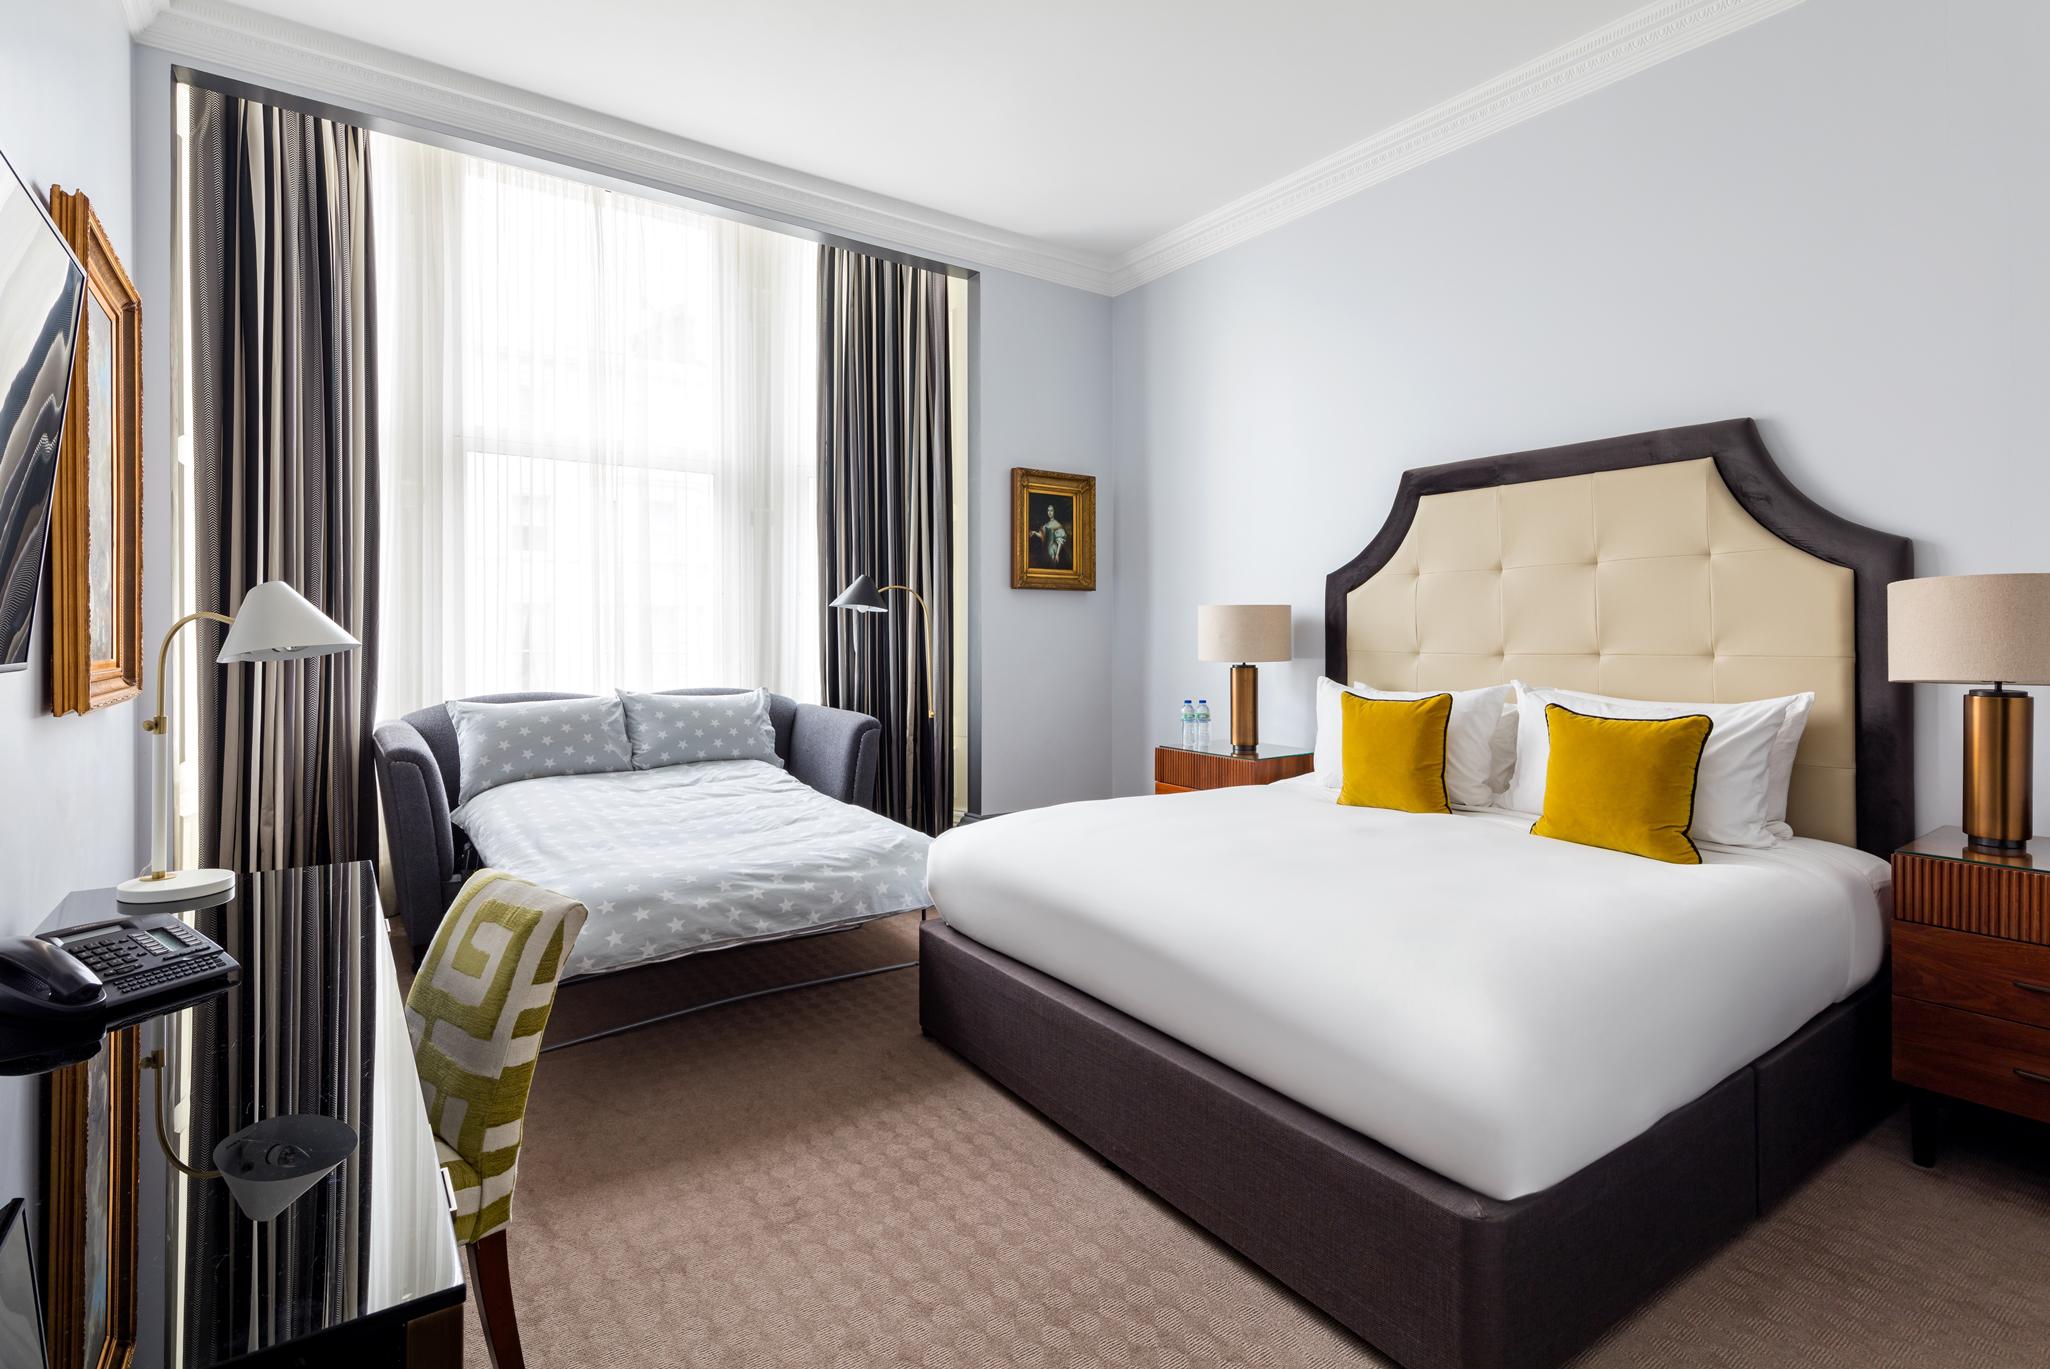 Family Room Radisson Blu Edwardian Vanderbilt Hotel, London London 020 7761 9000